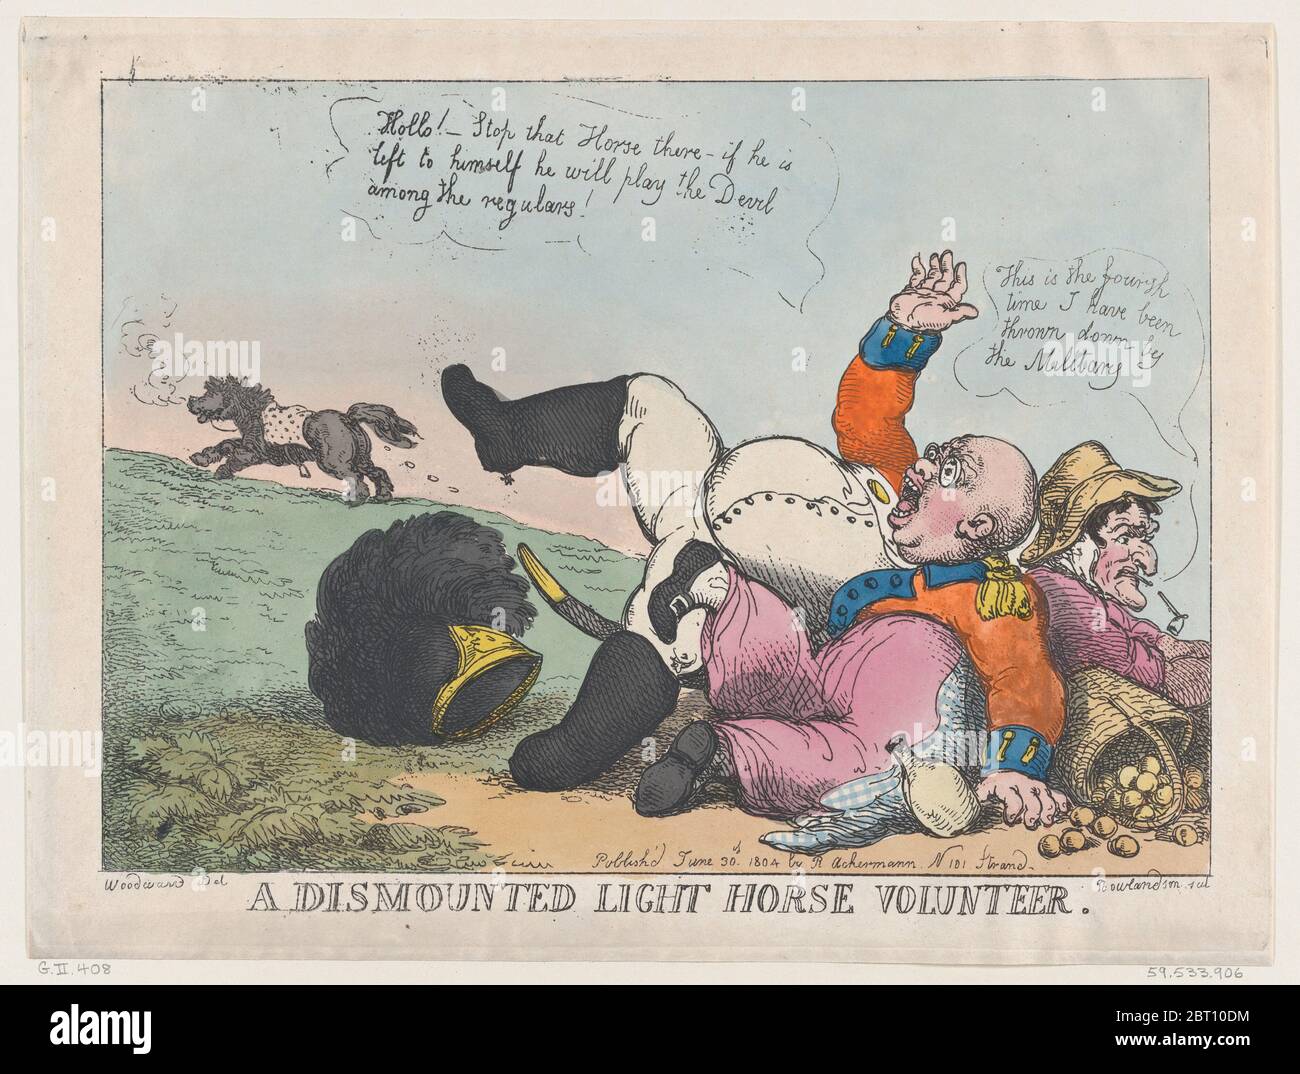 A Dismounted Light Horse Volunteer, June 30, 1804. Stock Photo